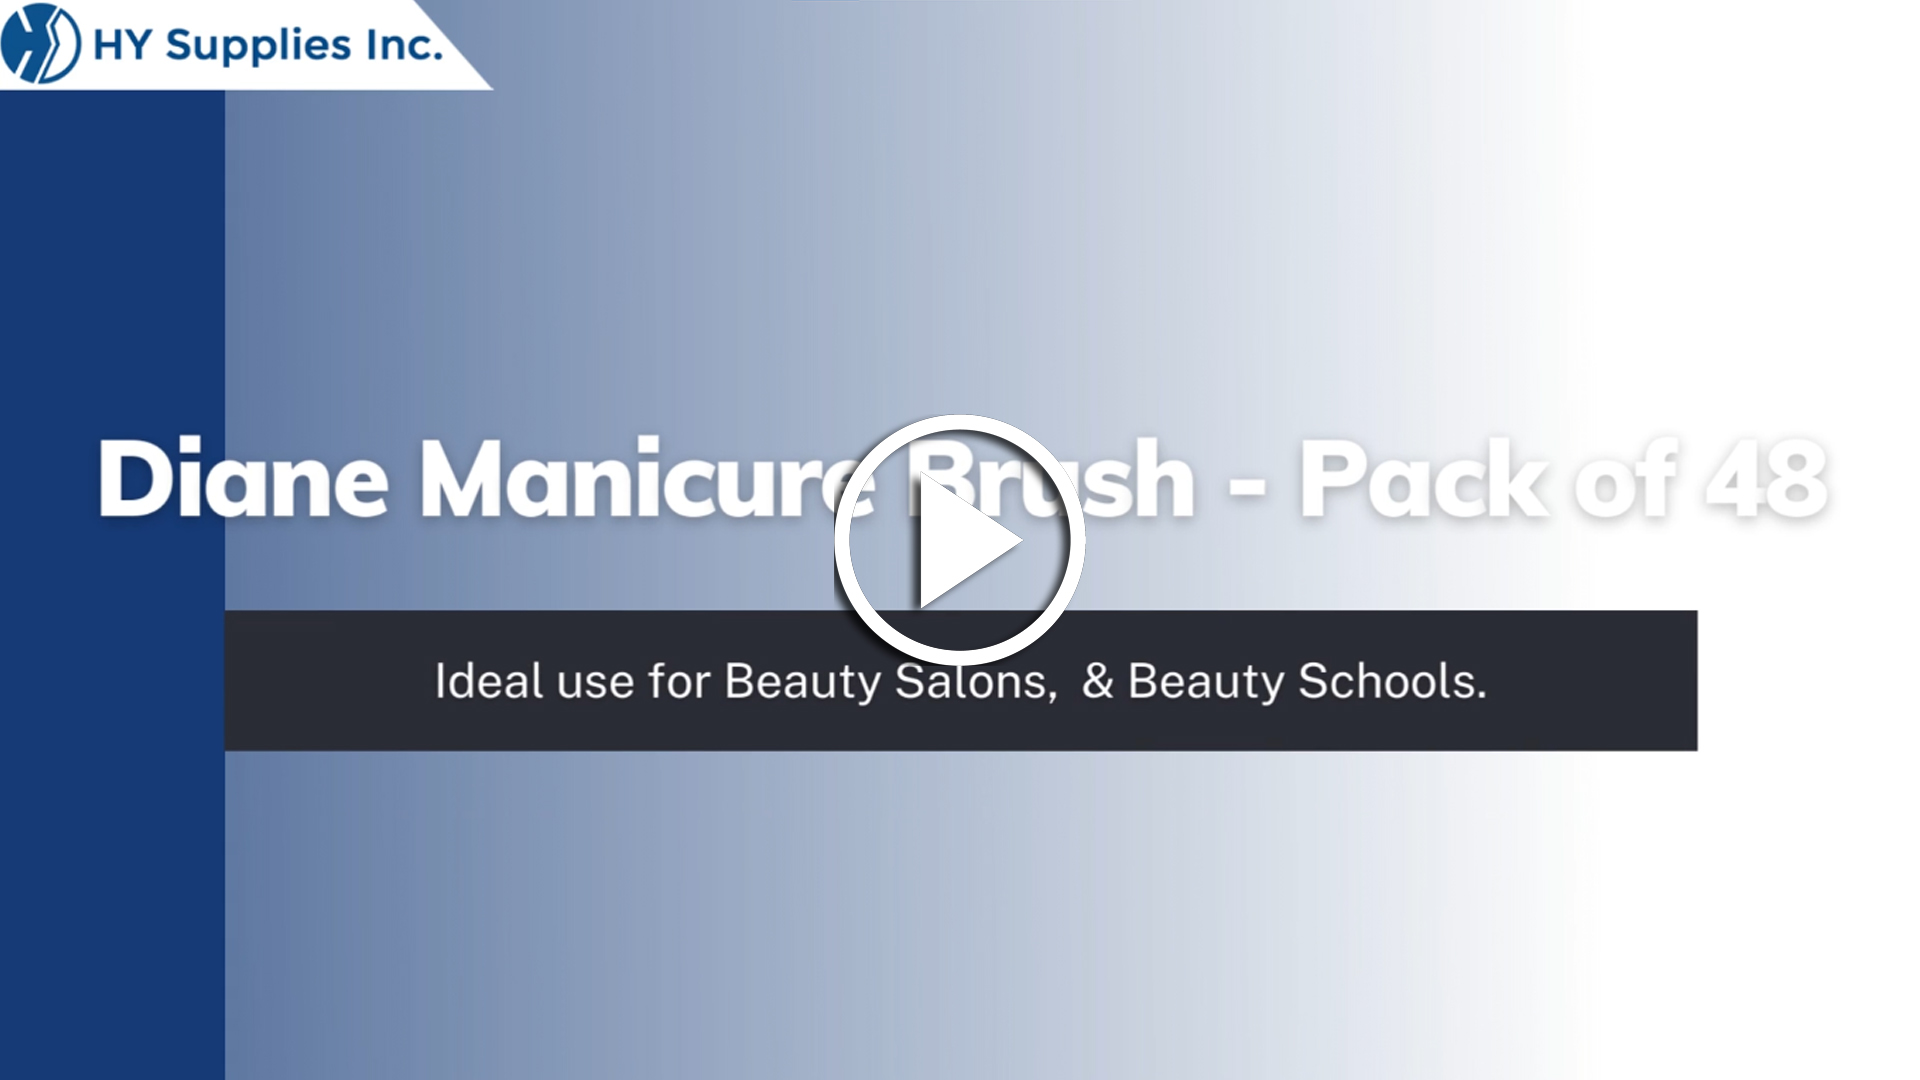 Diane Manicure Brush - Pack of 48